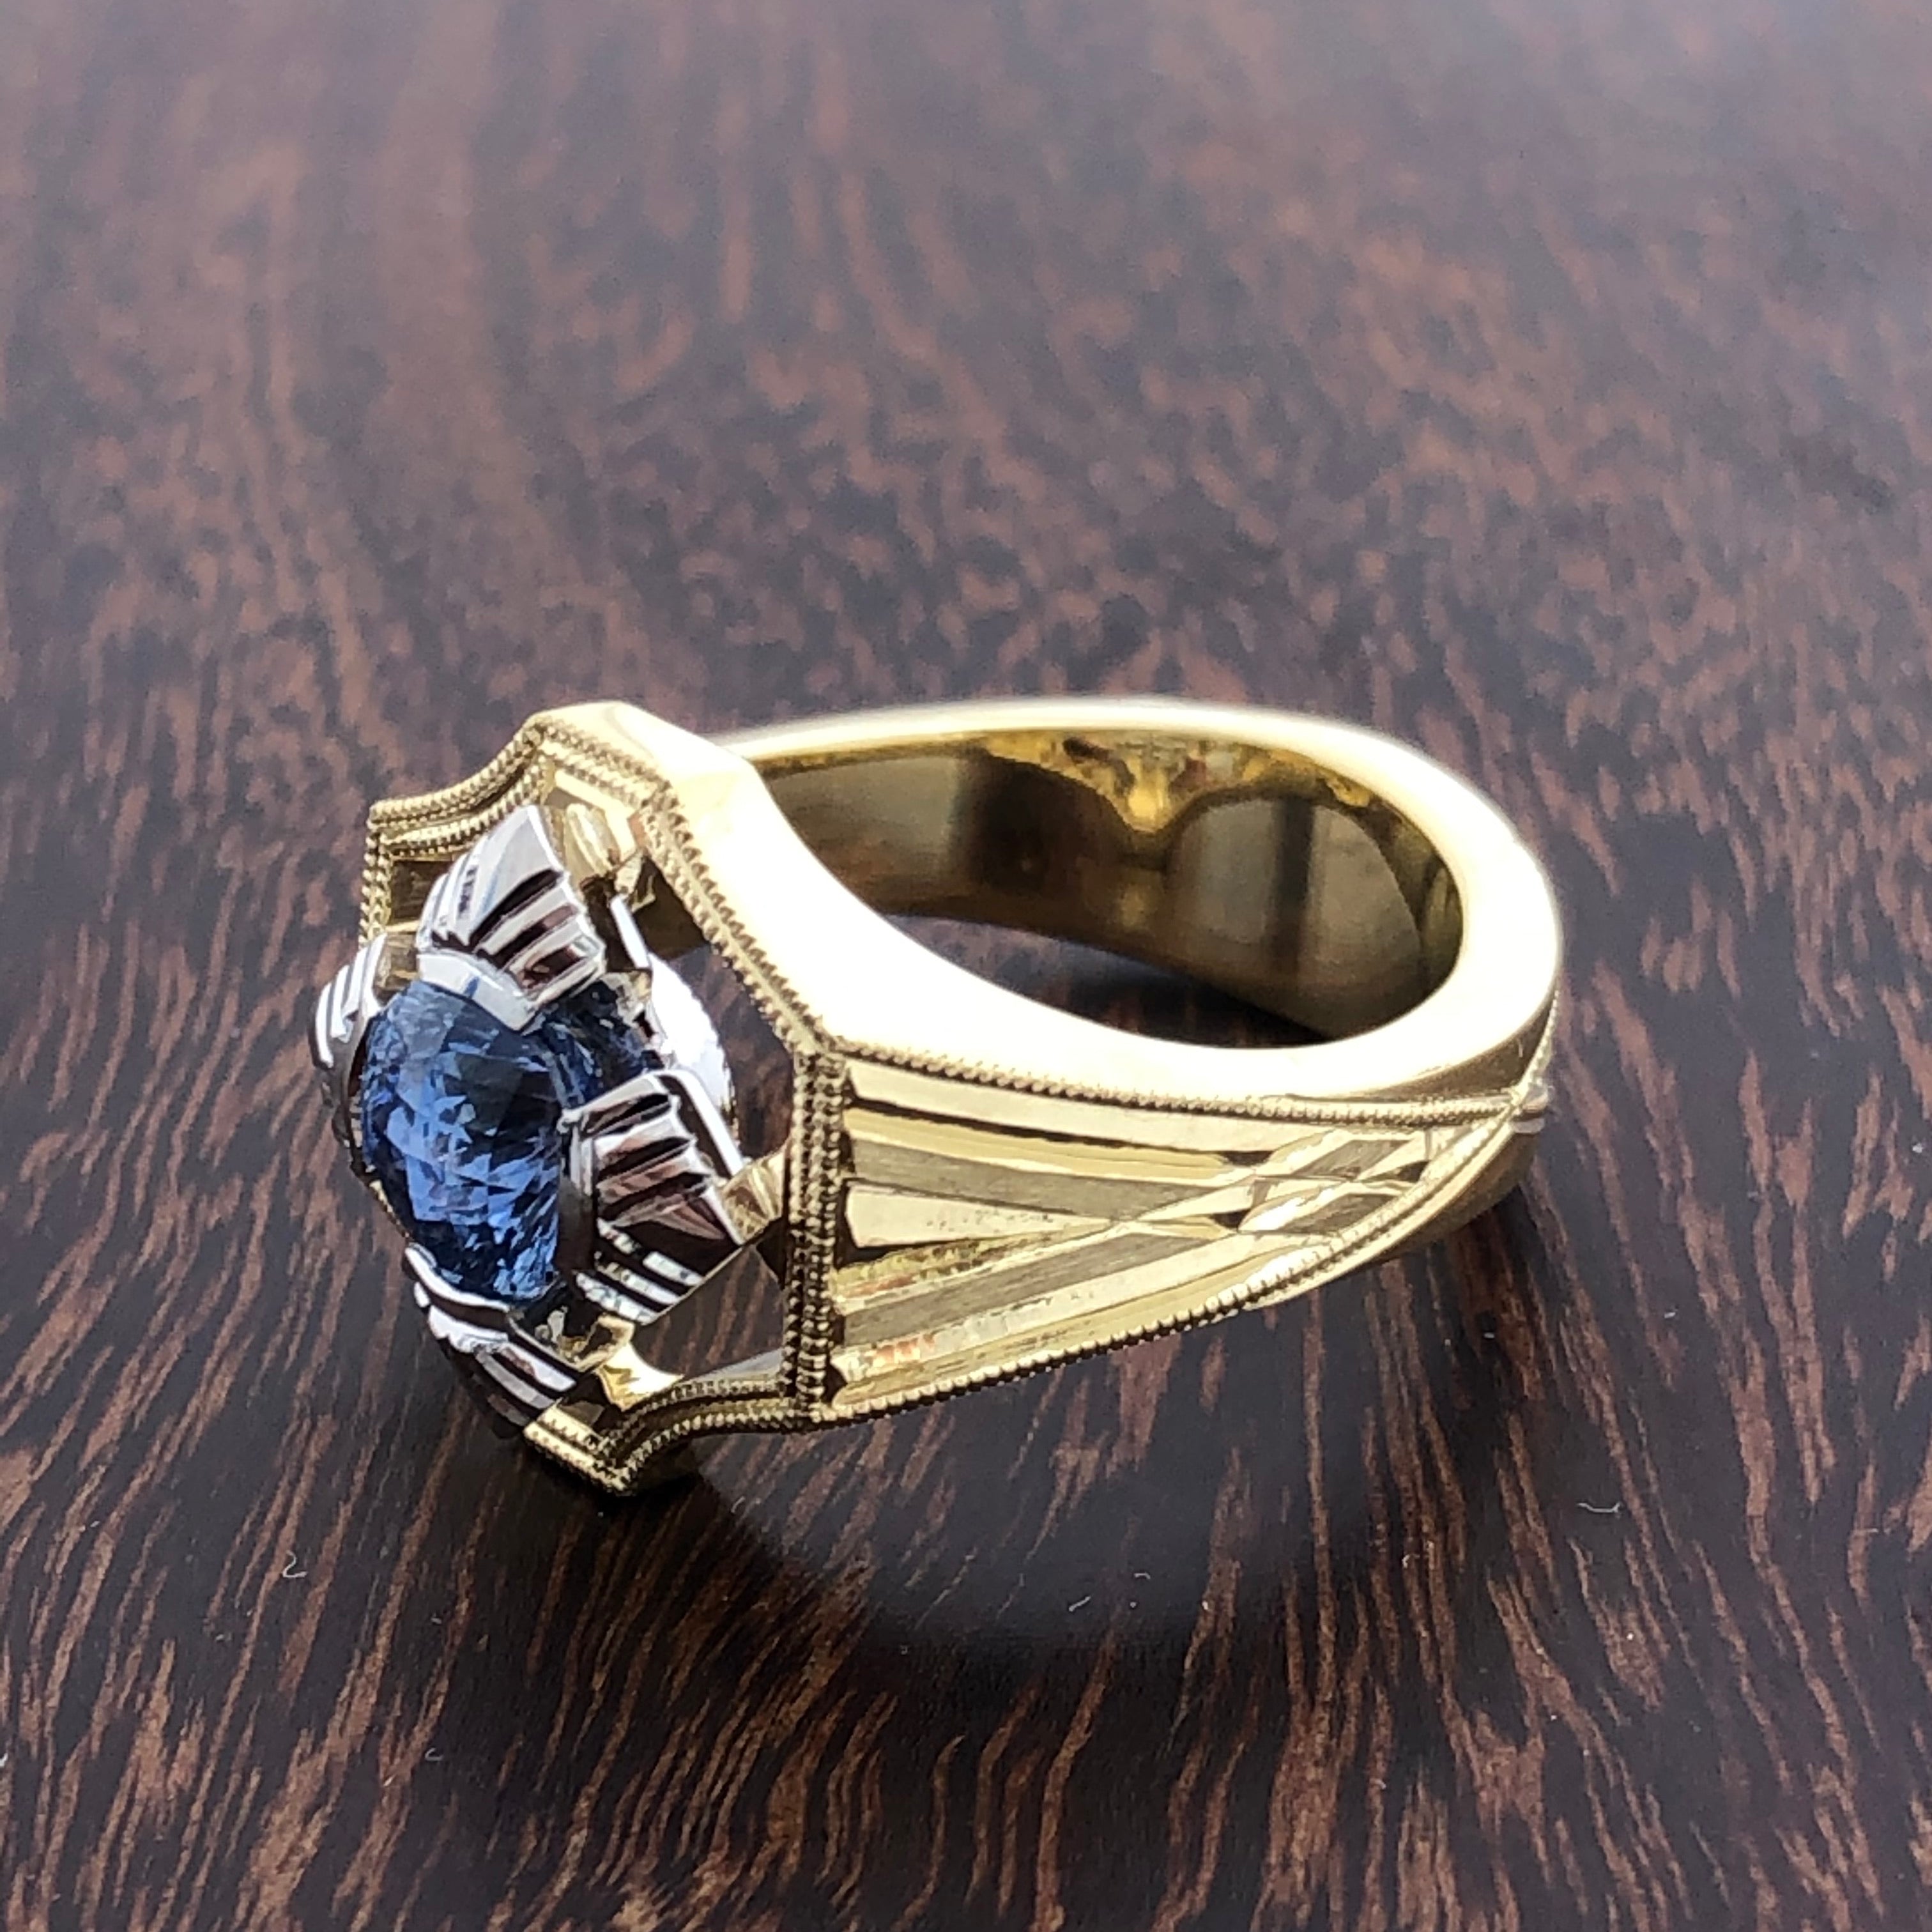 Blue sapphire platinum and 18k ring 1.18 carat